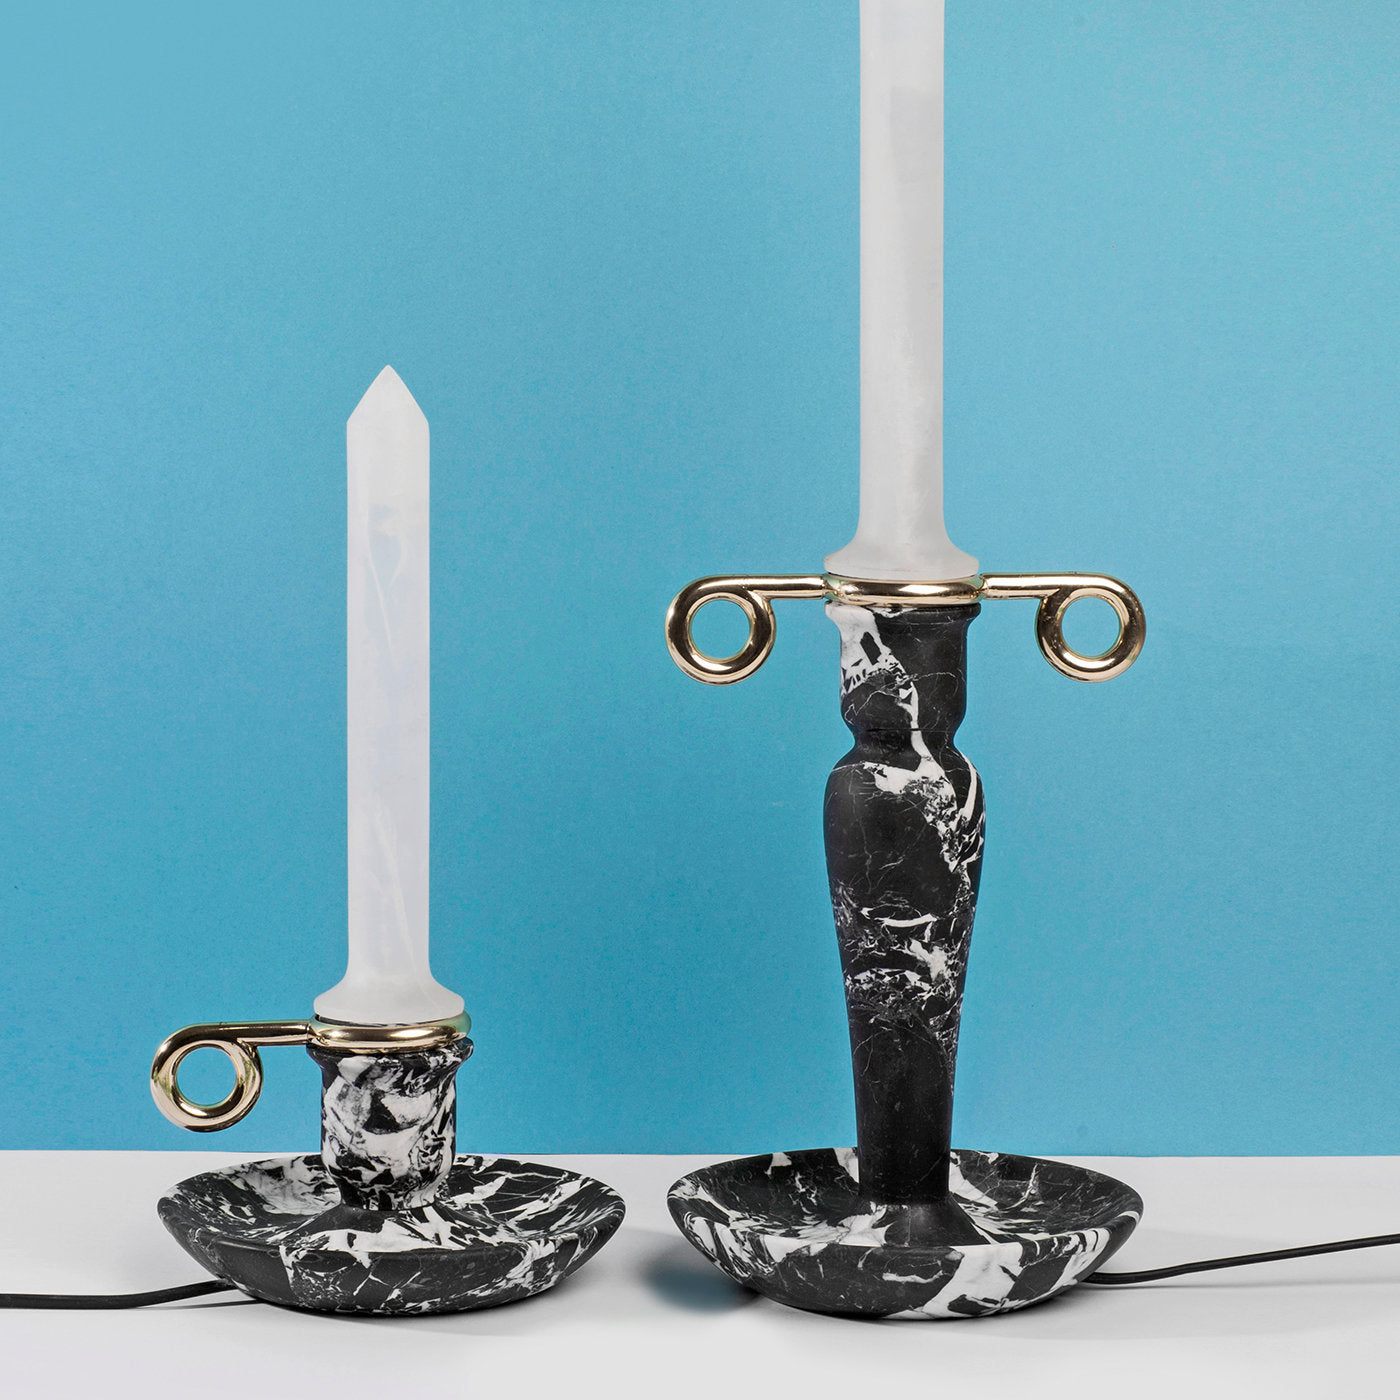 Candela Black Marble Table Lamp - Alternative view 1